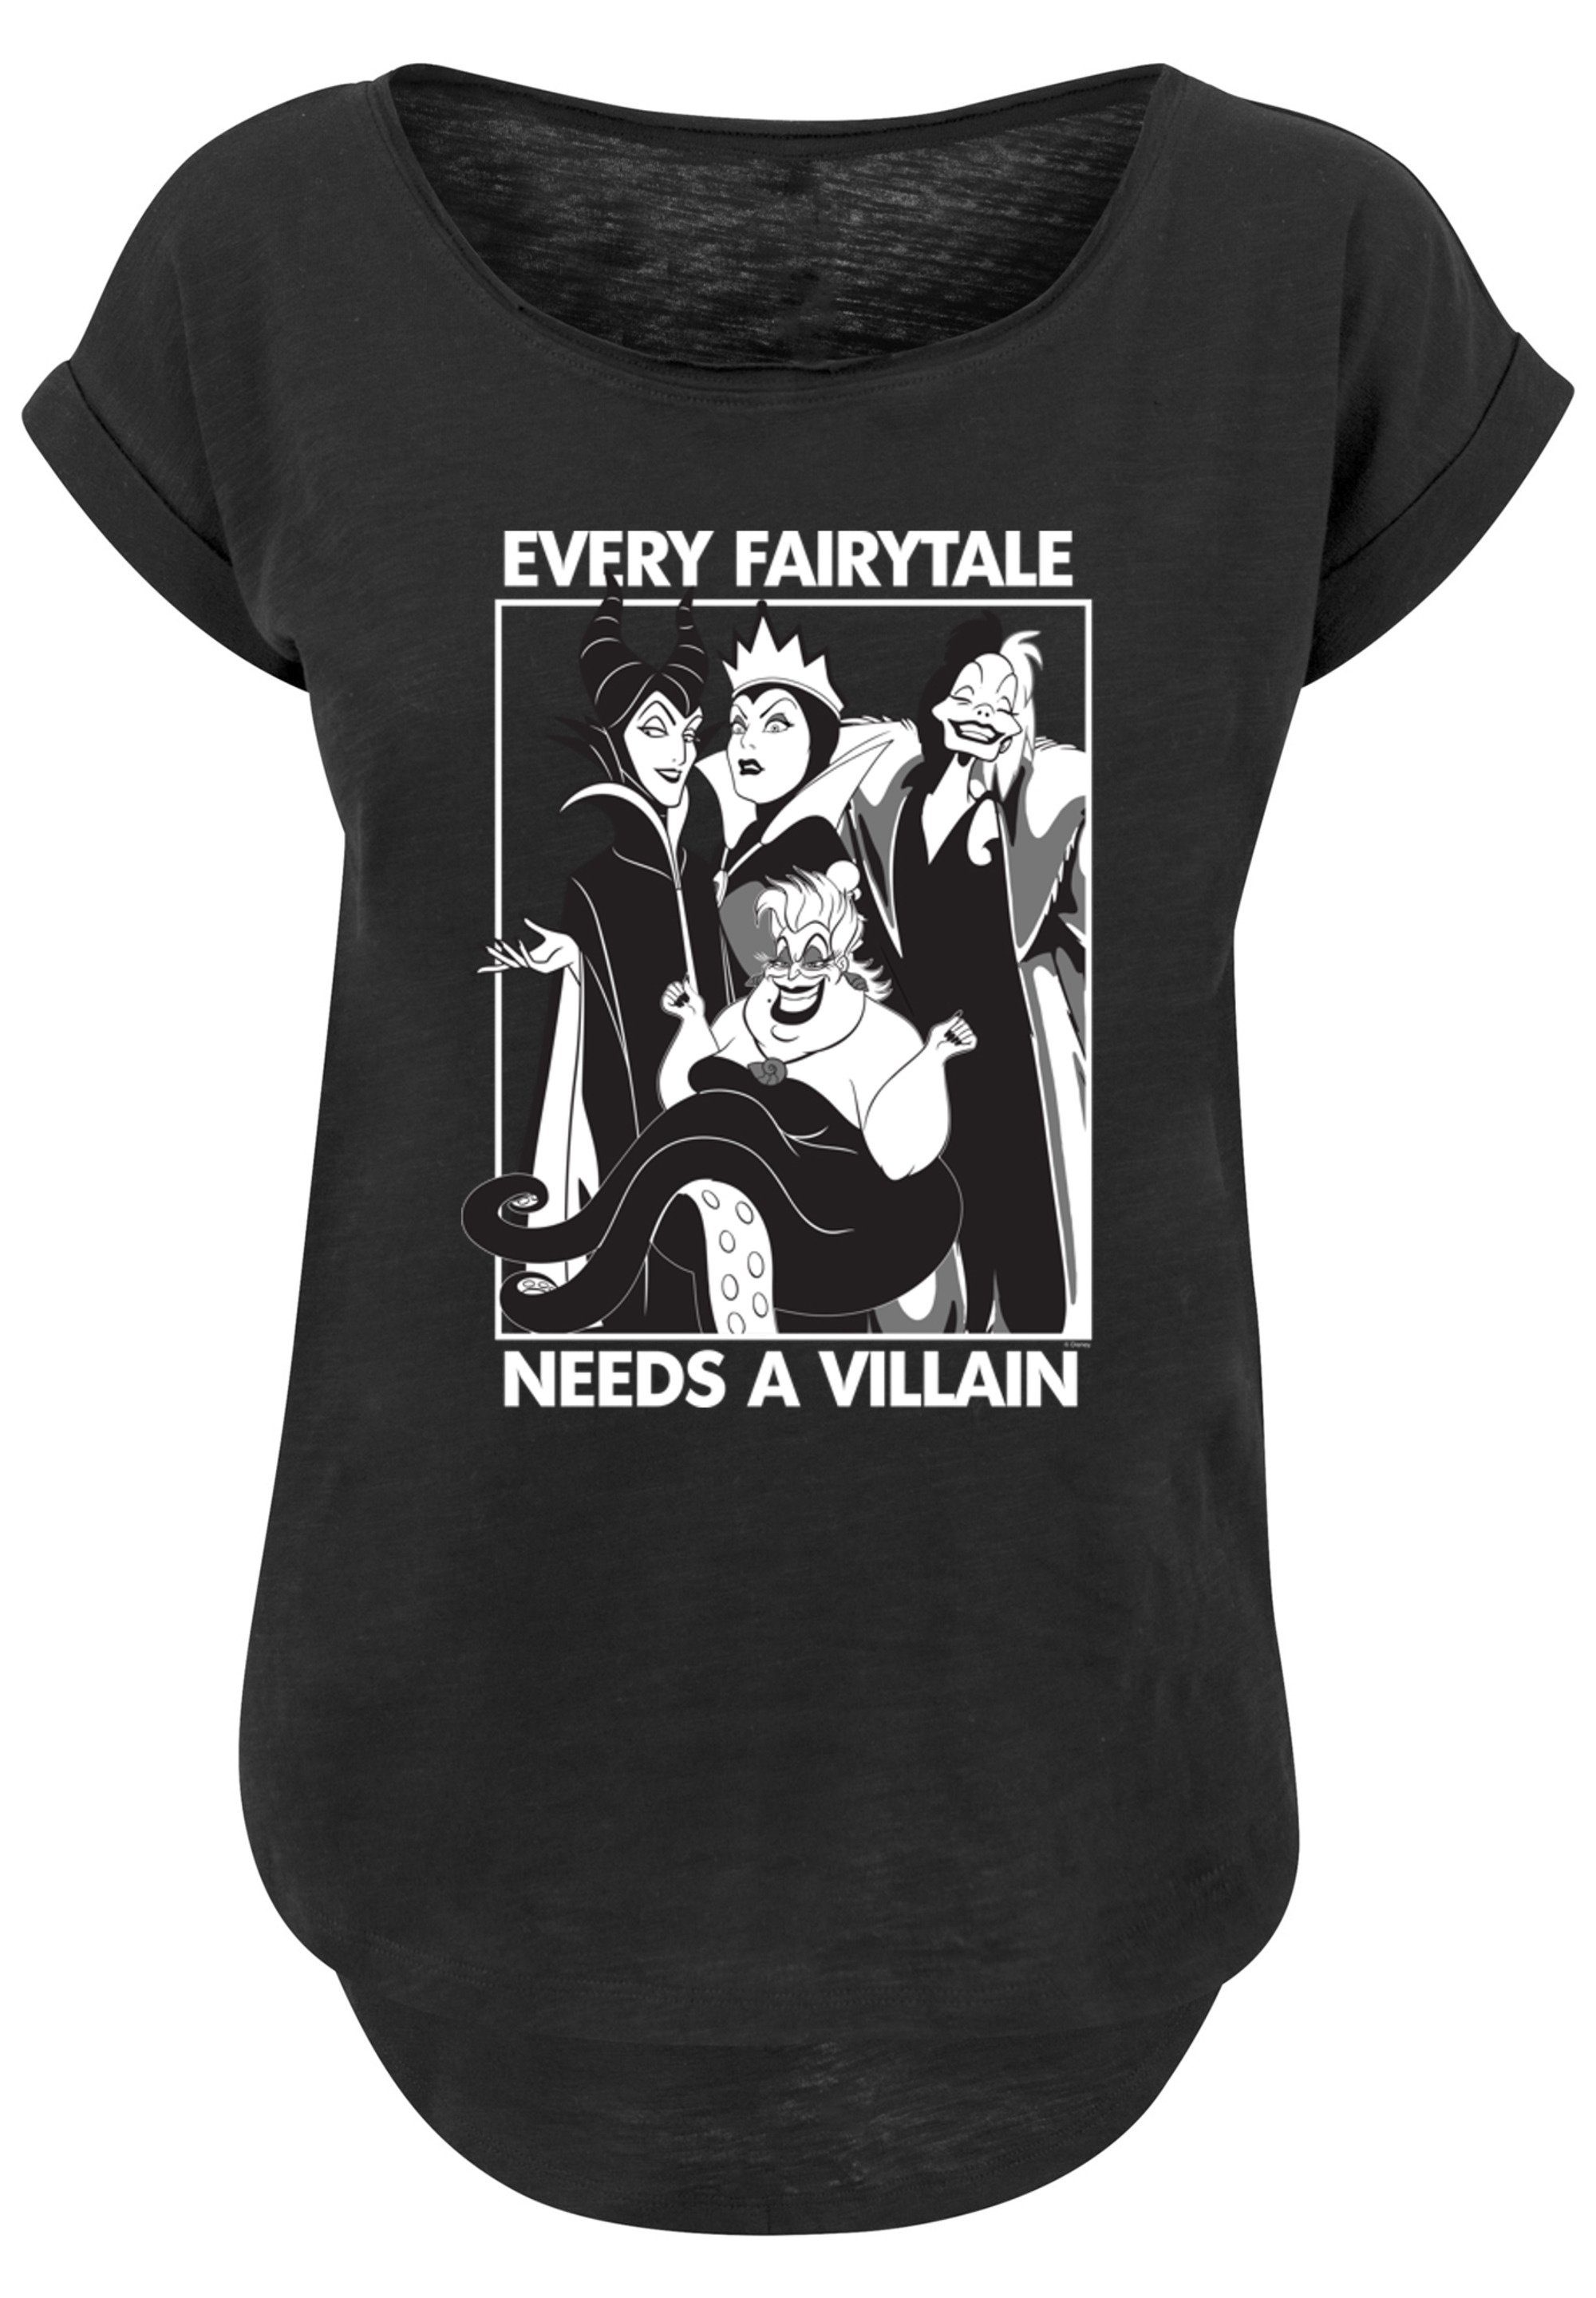 A Villain Print Tale Needs Fairy Every F4NT4STIC T-Shirt